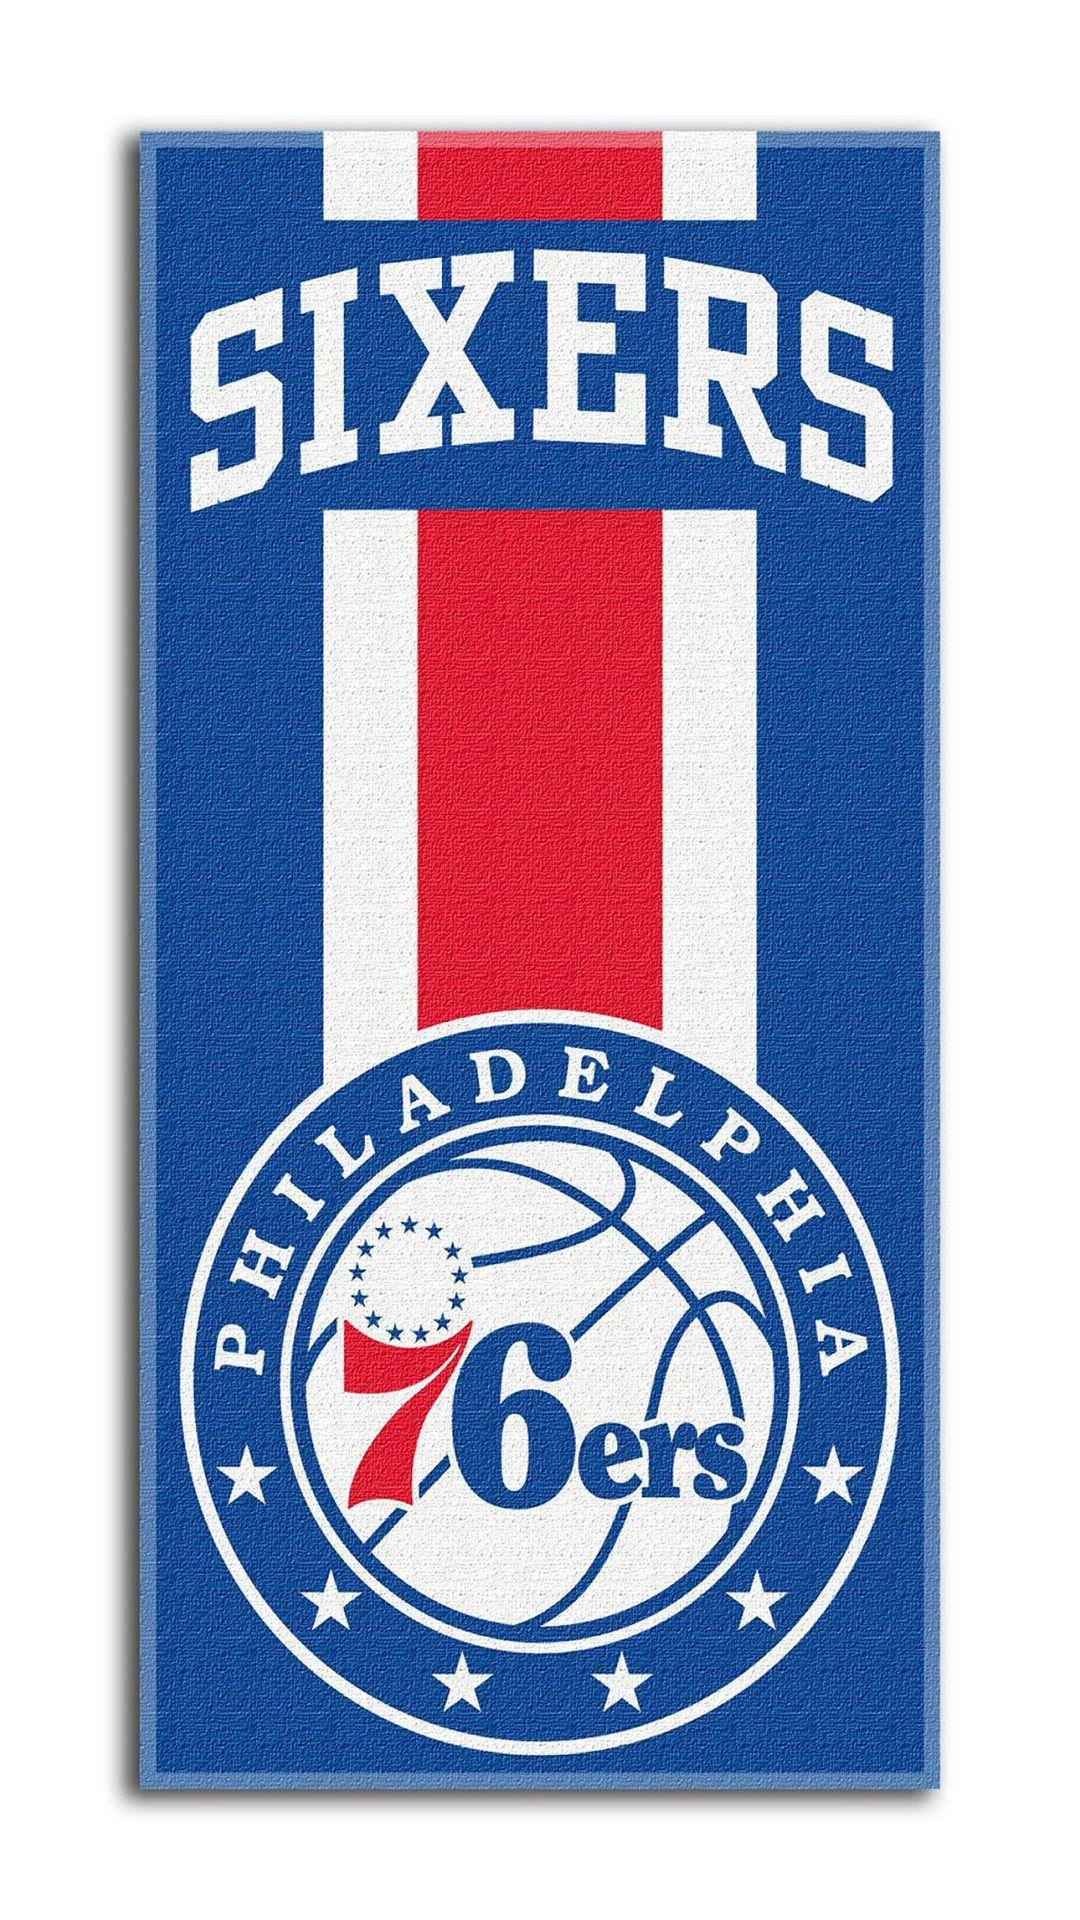 Philadelphia 76ers Wallpapers Wallpaper Cave